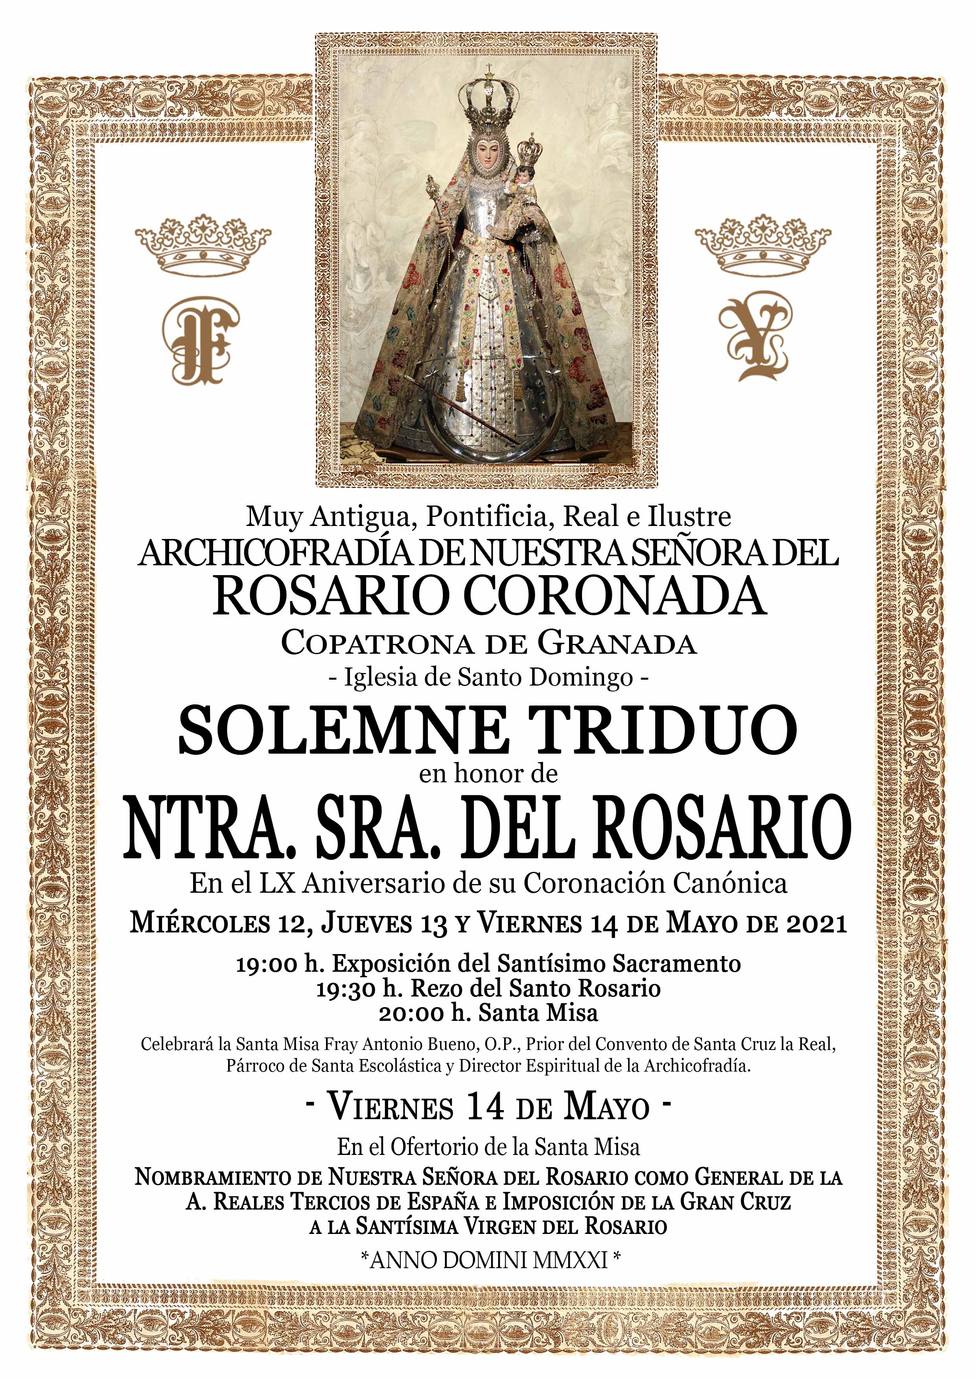 ctv-oqr-triduo-mayo-rosario-coronada-2021-copatrona-granada-rrss